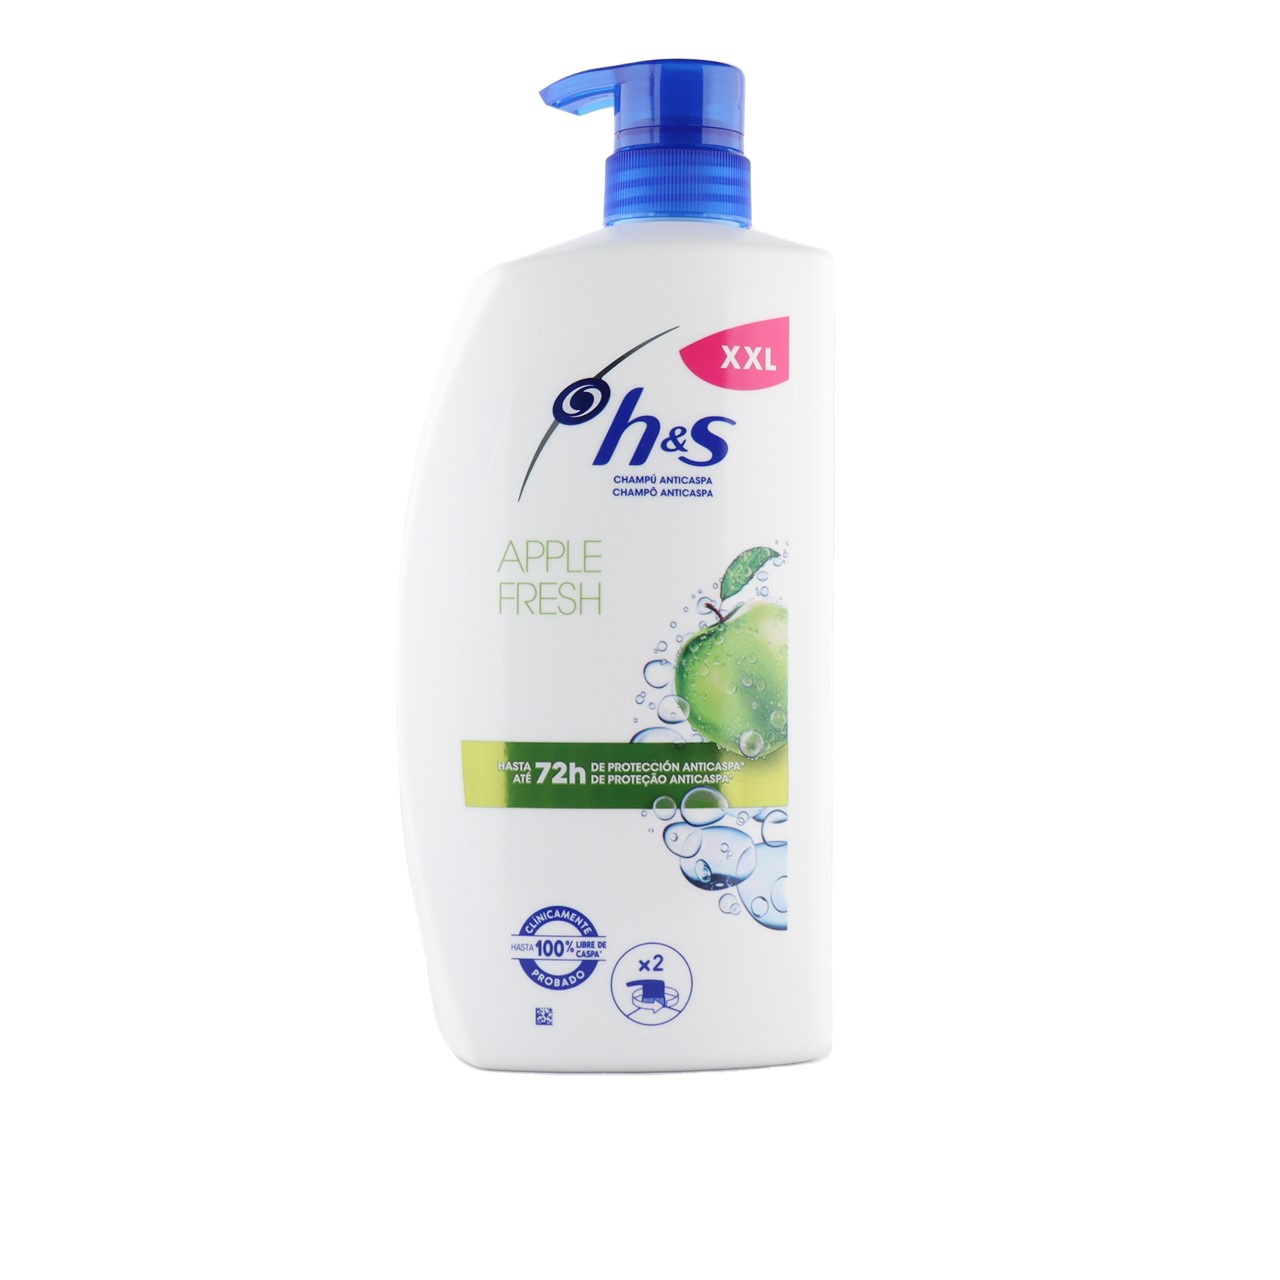 H&S Apple Fresh Shampoo 900ml (30.43fl oz)